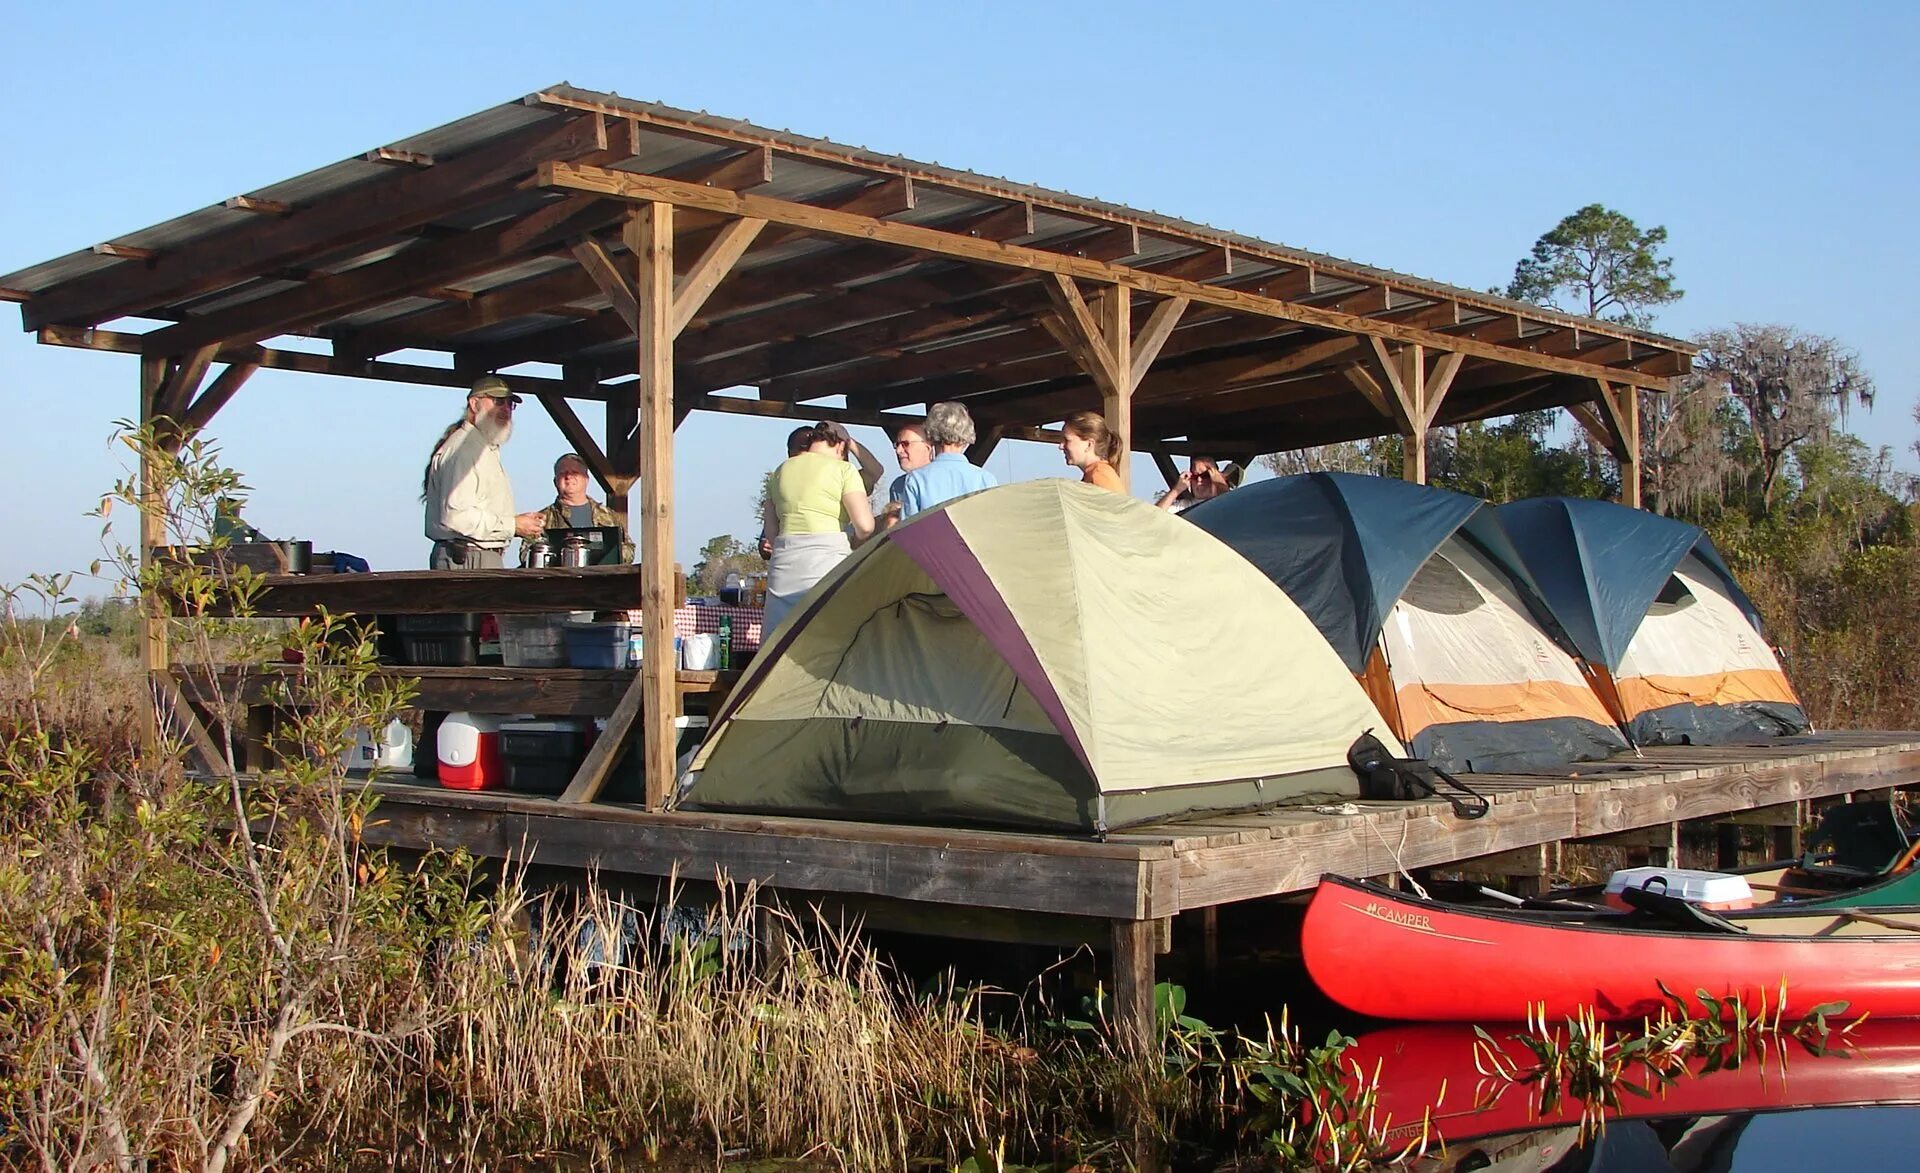 Camping Georgia. Camping platform